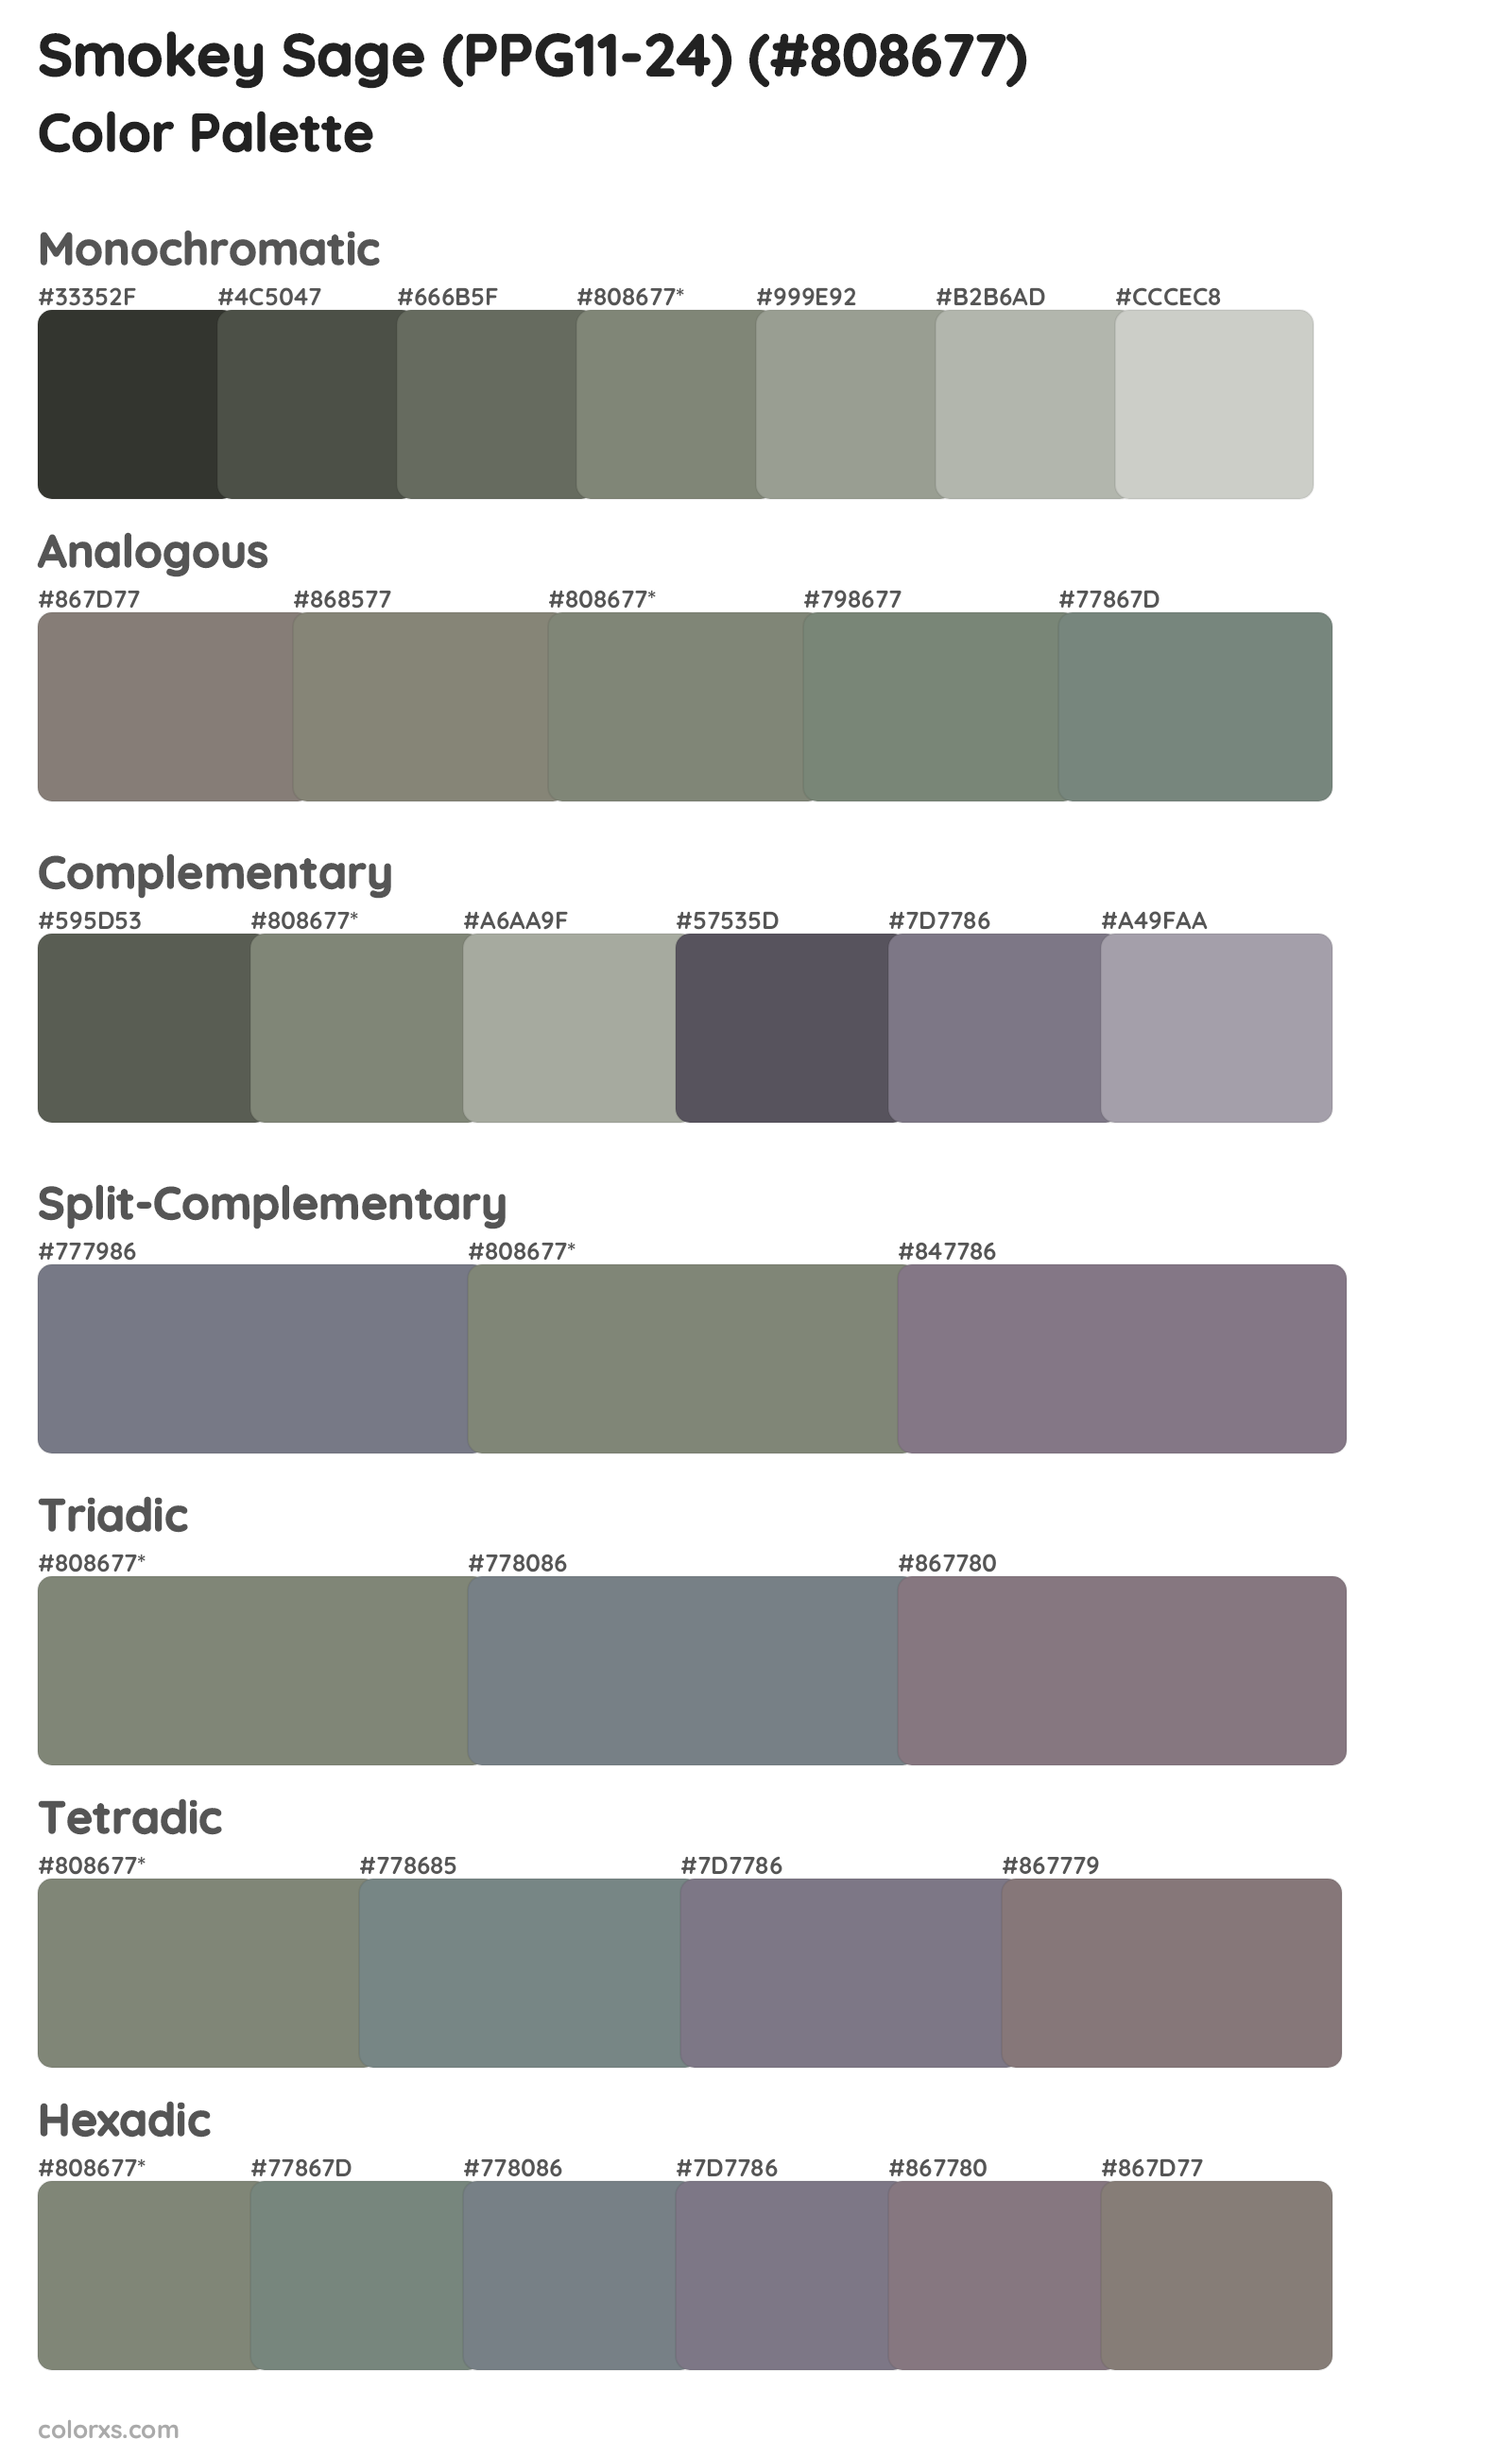 Smokey Sage (PPG11-24) Color Scheme Palettes